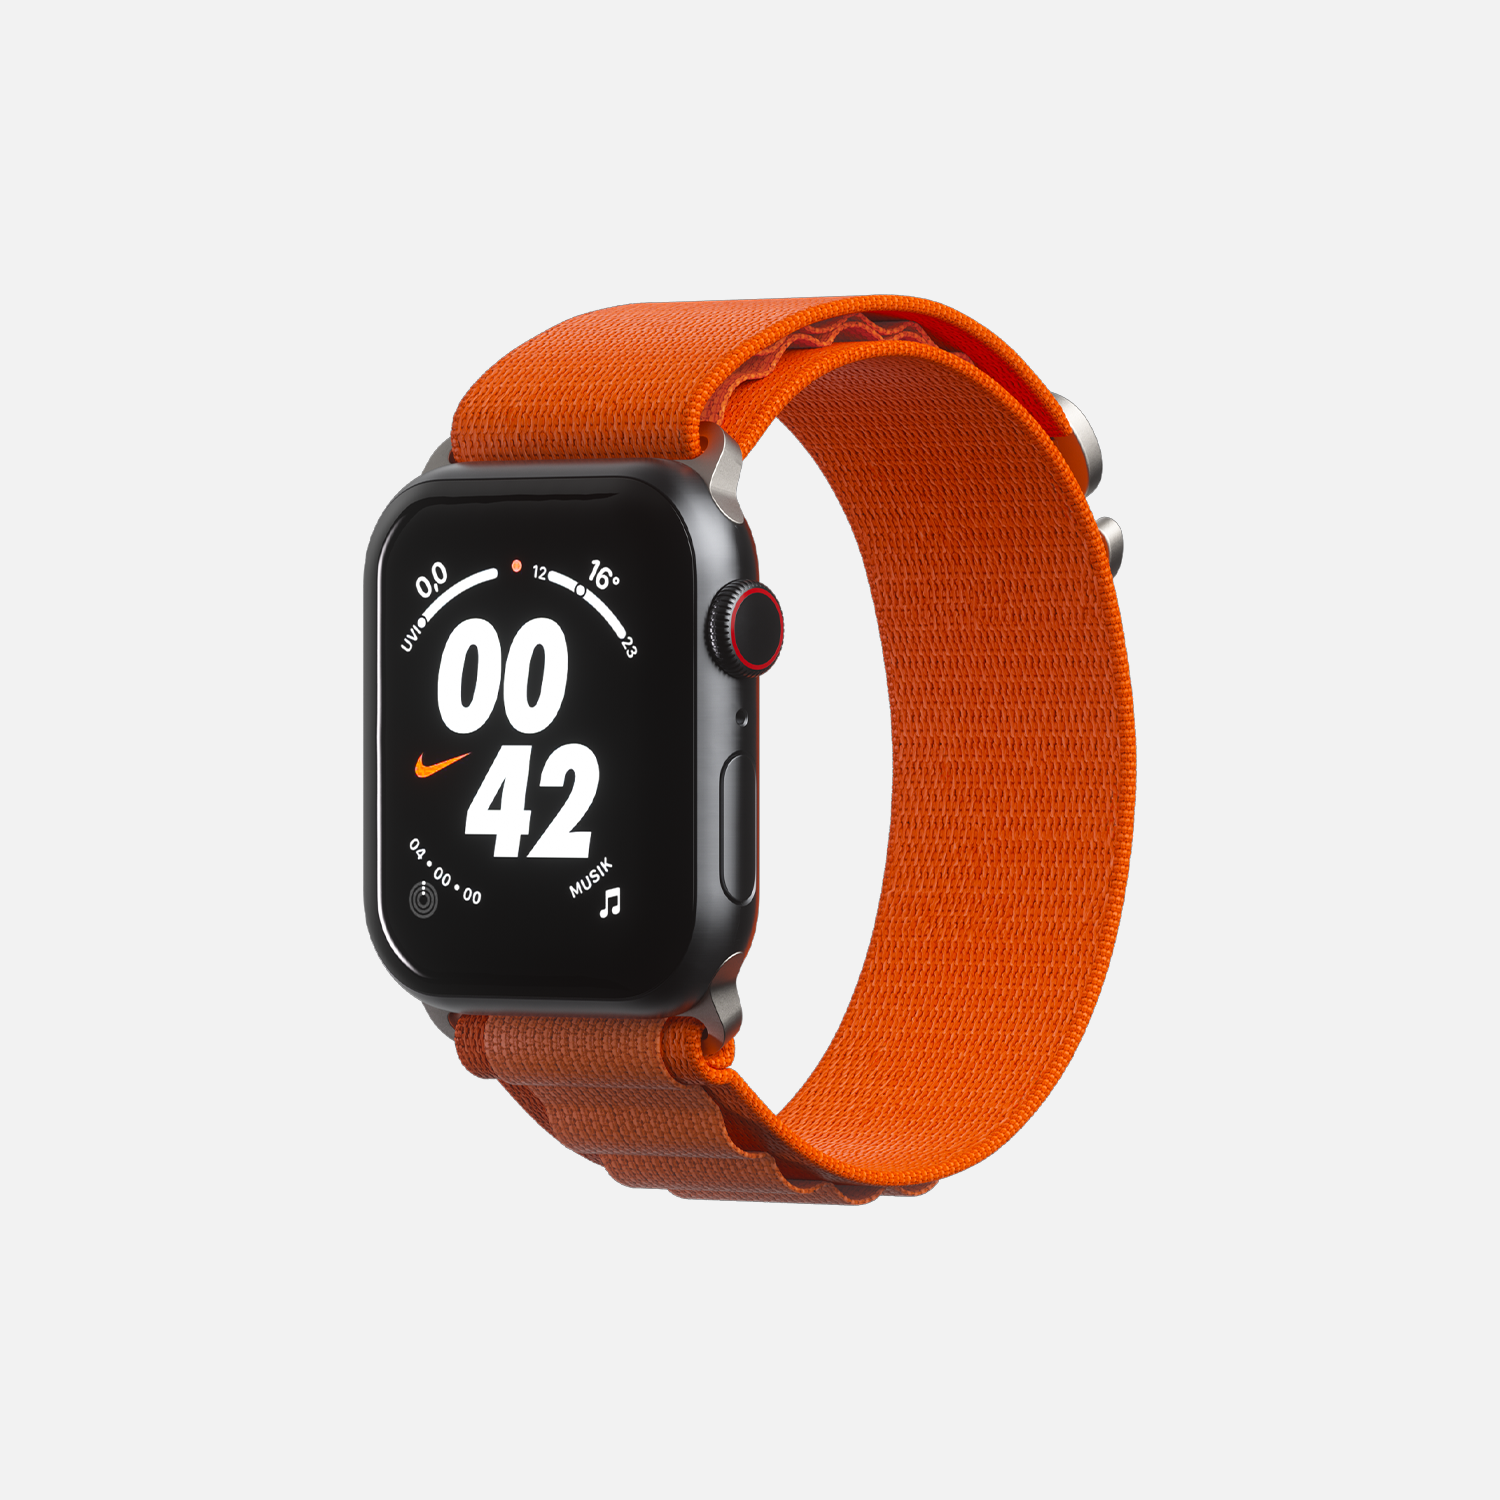 Orange sports smartwatch with digital display on white background.